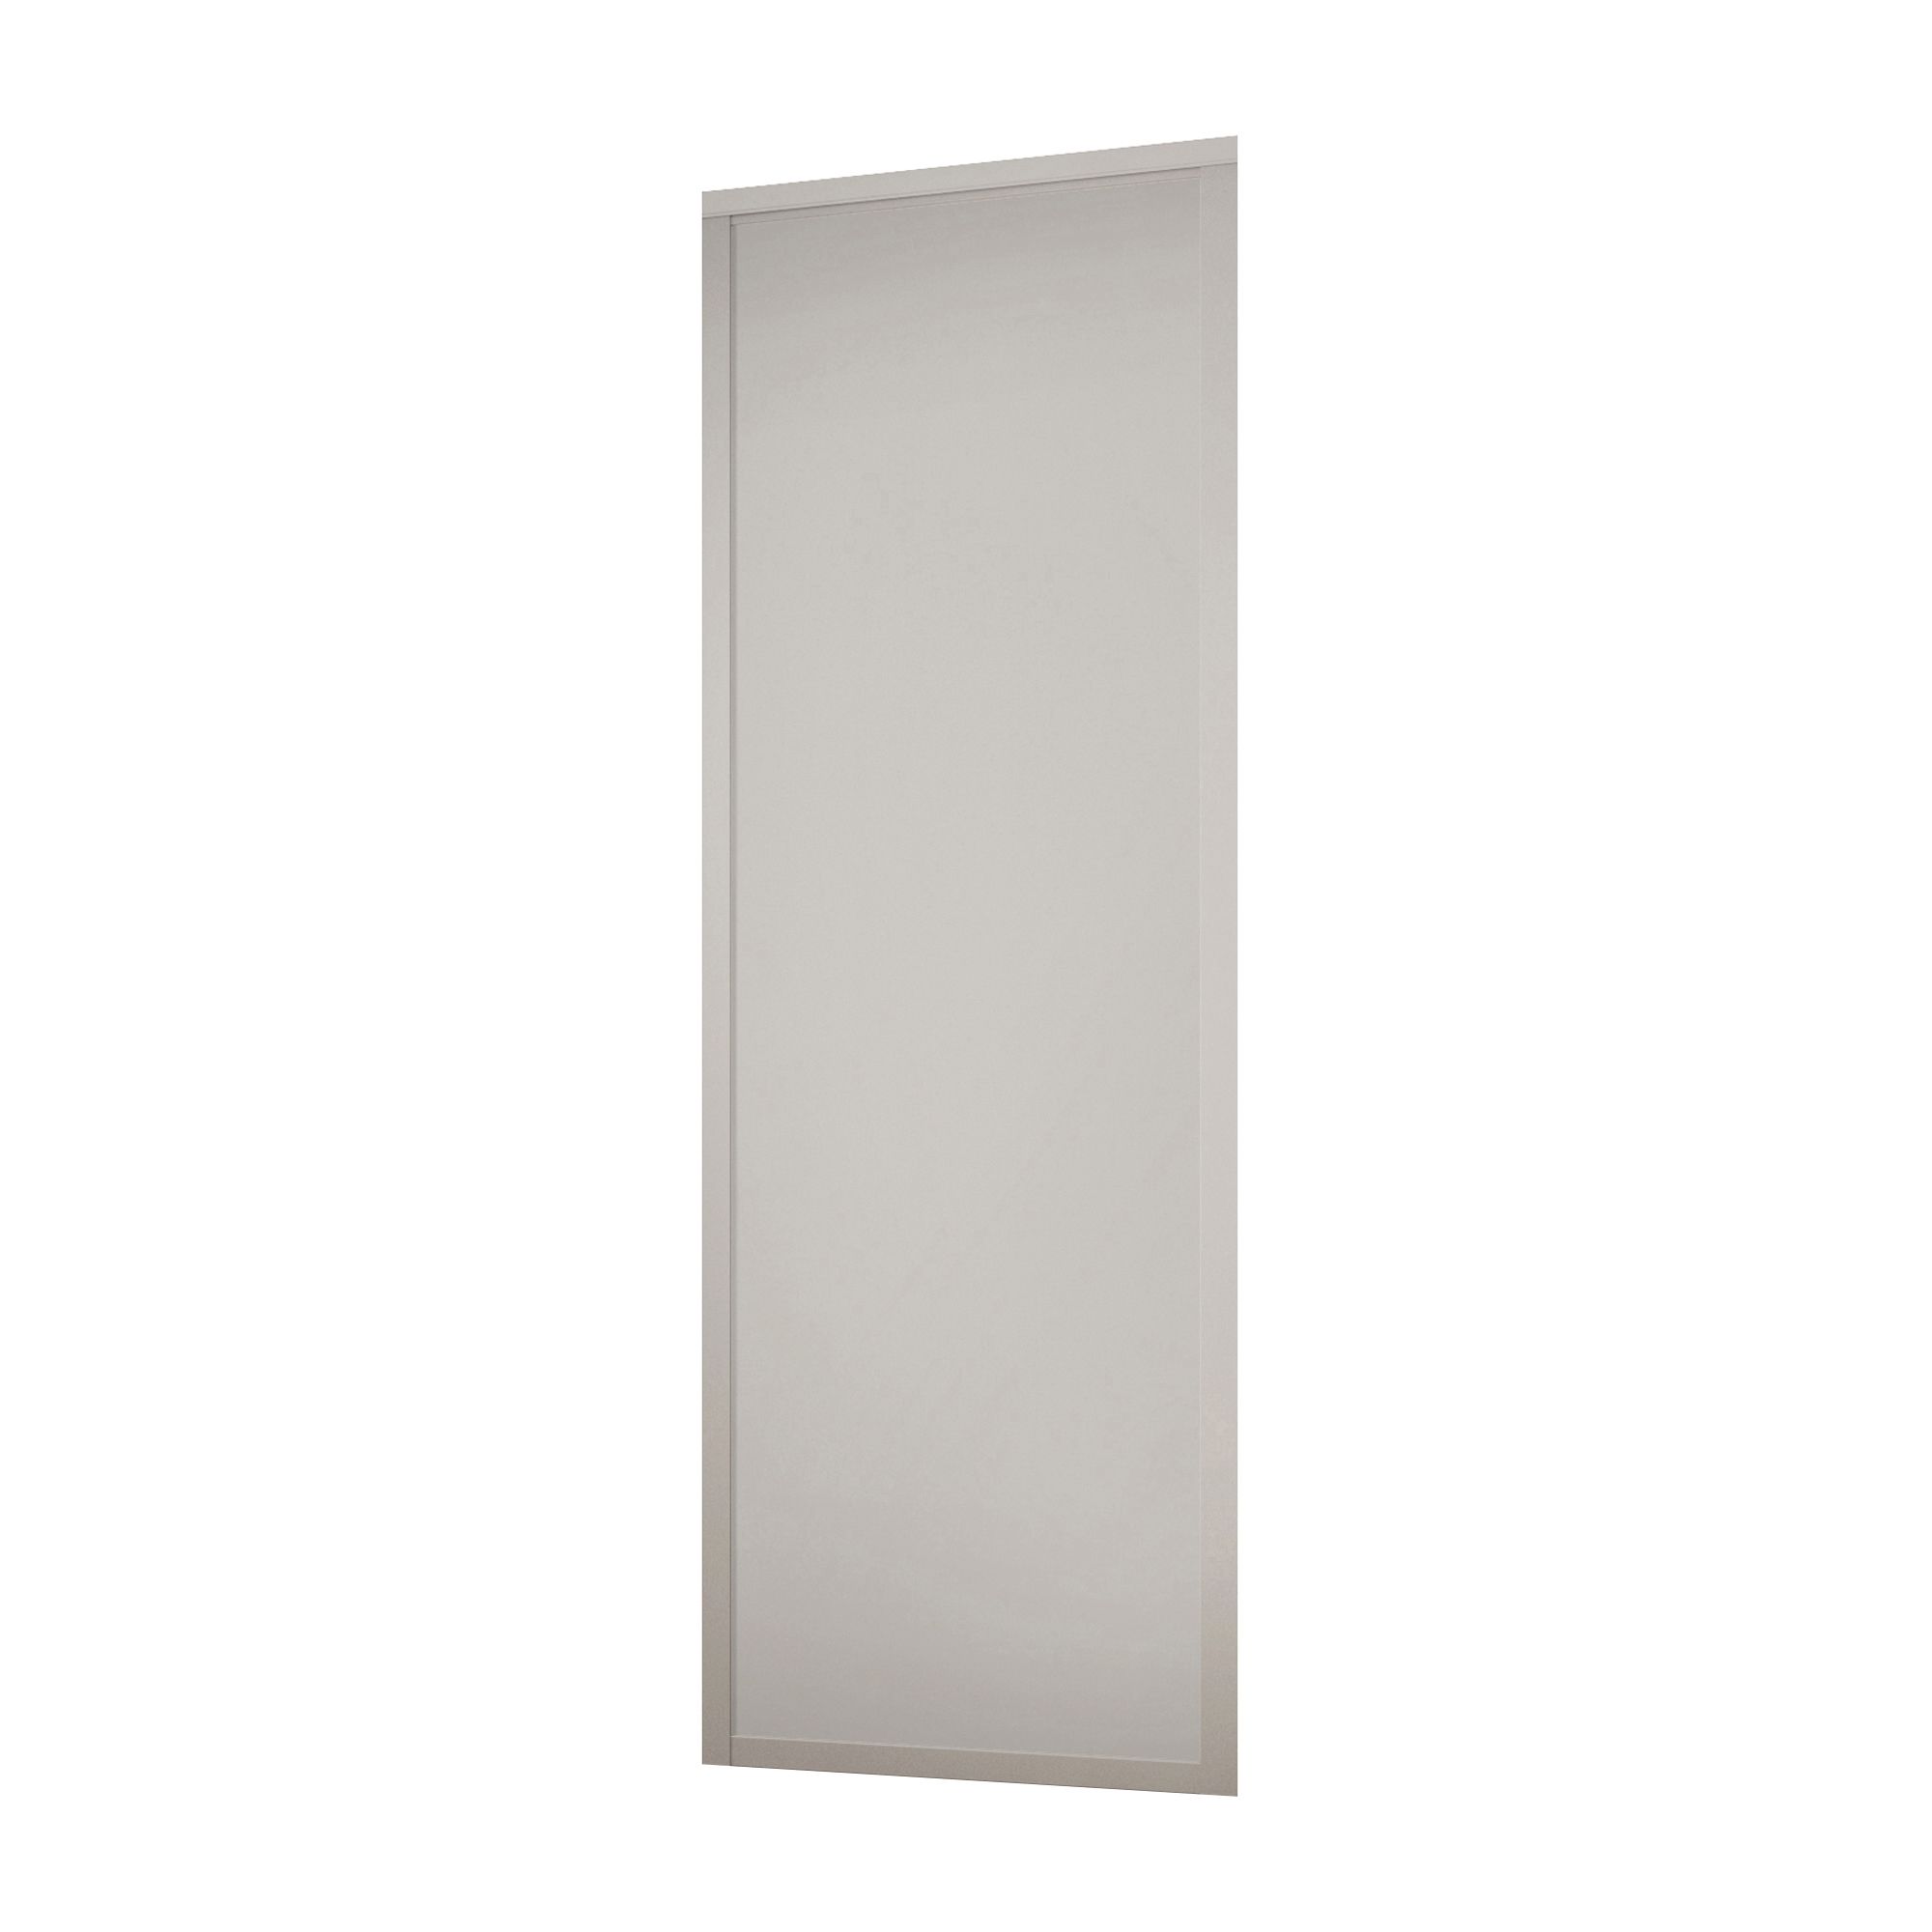 Spacepro Shaker Matt Dove grey Single panel Sliding wardrobe door (H) 2260mm x (W) 762mm